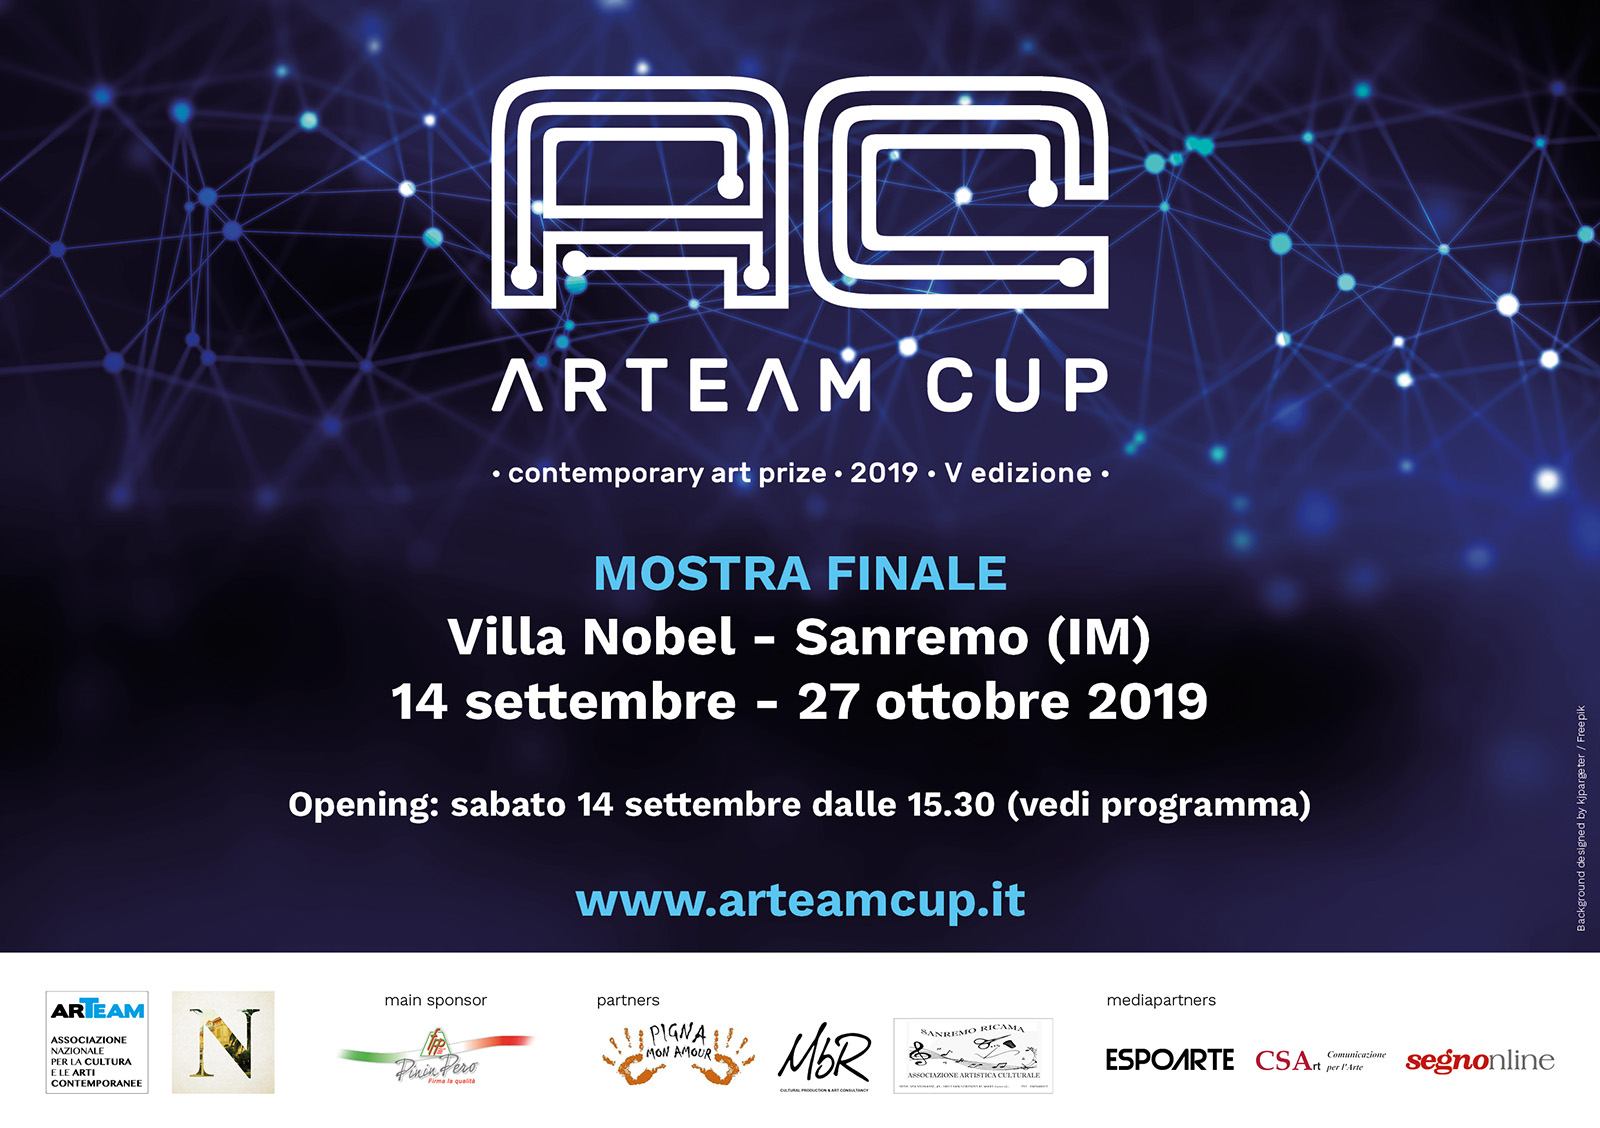 Foto 1 - Arteam Cup 2019, la mostra dei finalisti a Villa Nobel, Sanremo